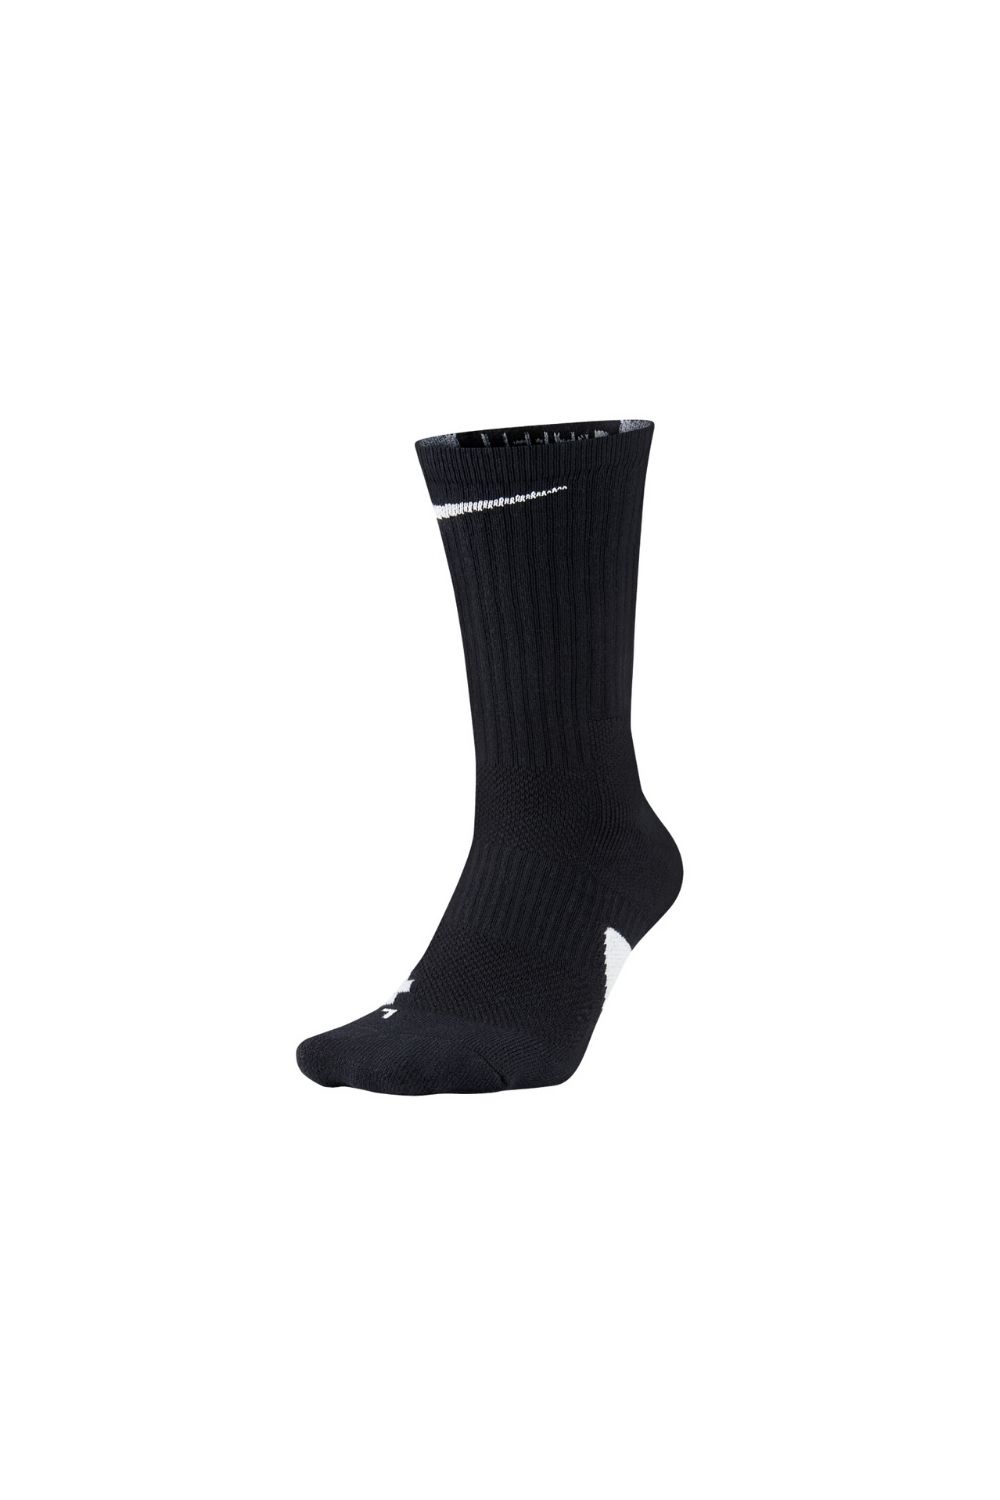 NIKE - Unisex κάλτσες NIKE ELITE CREW μαύρες Γυναικεία/Αξεσουάρ/Κάλτσες